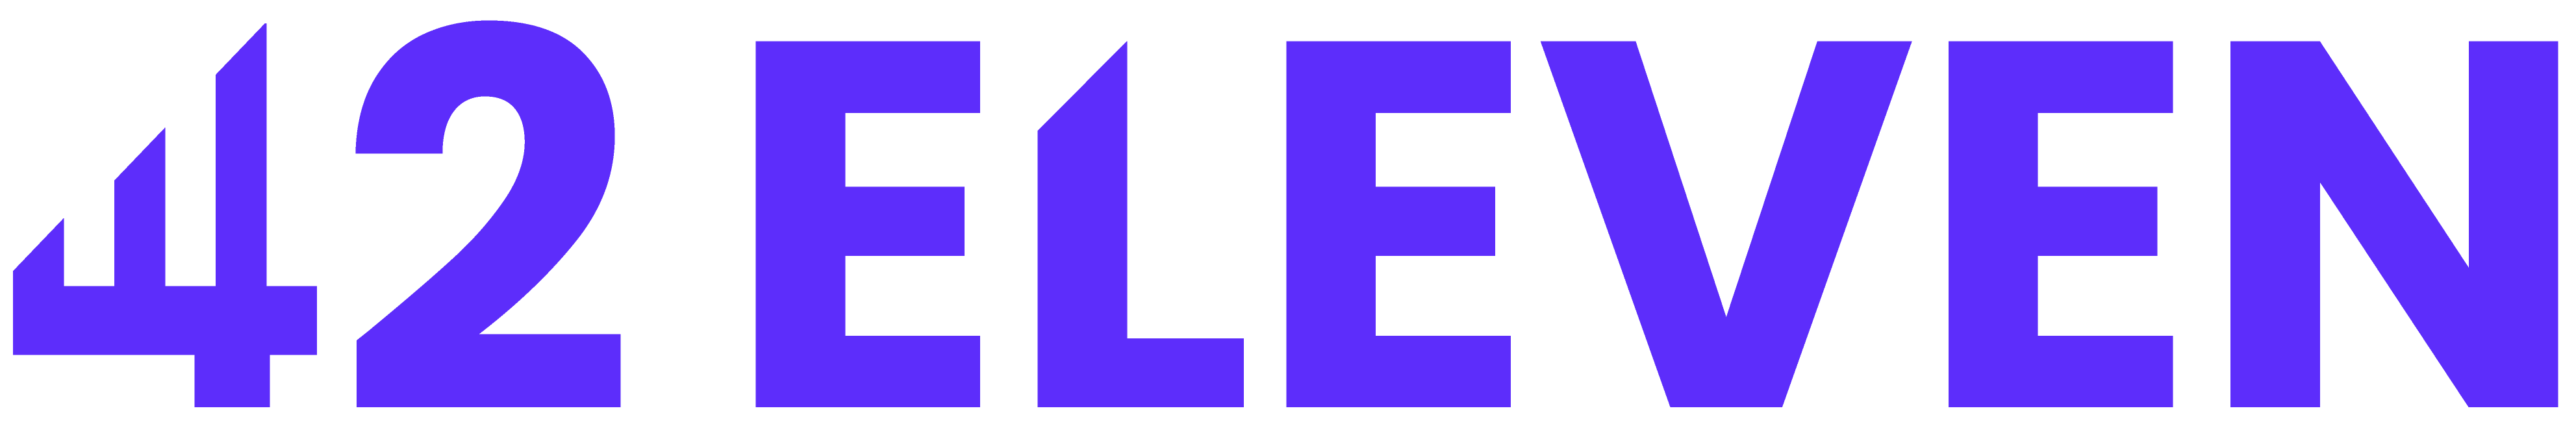 42Eleven logo